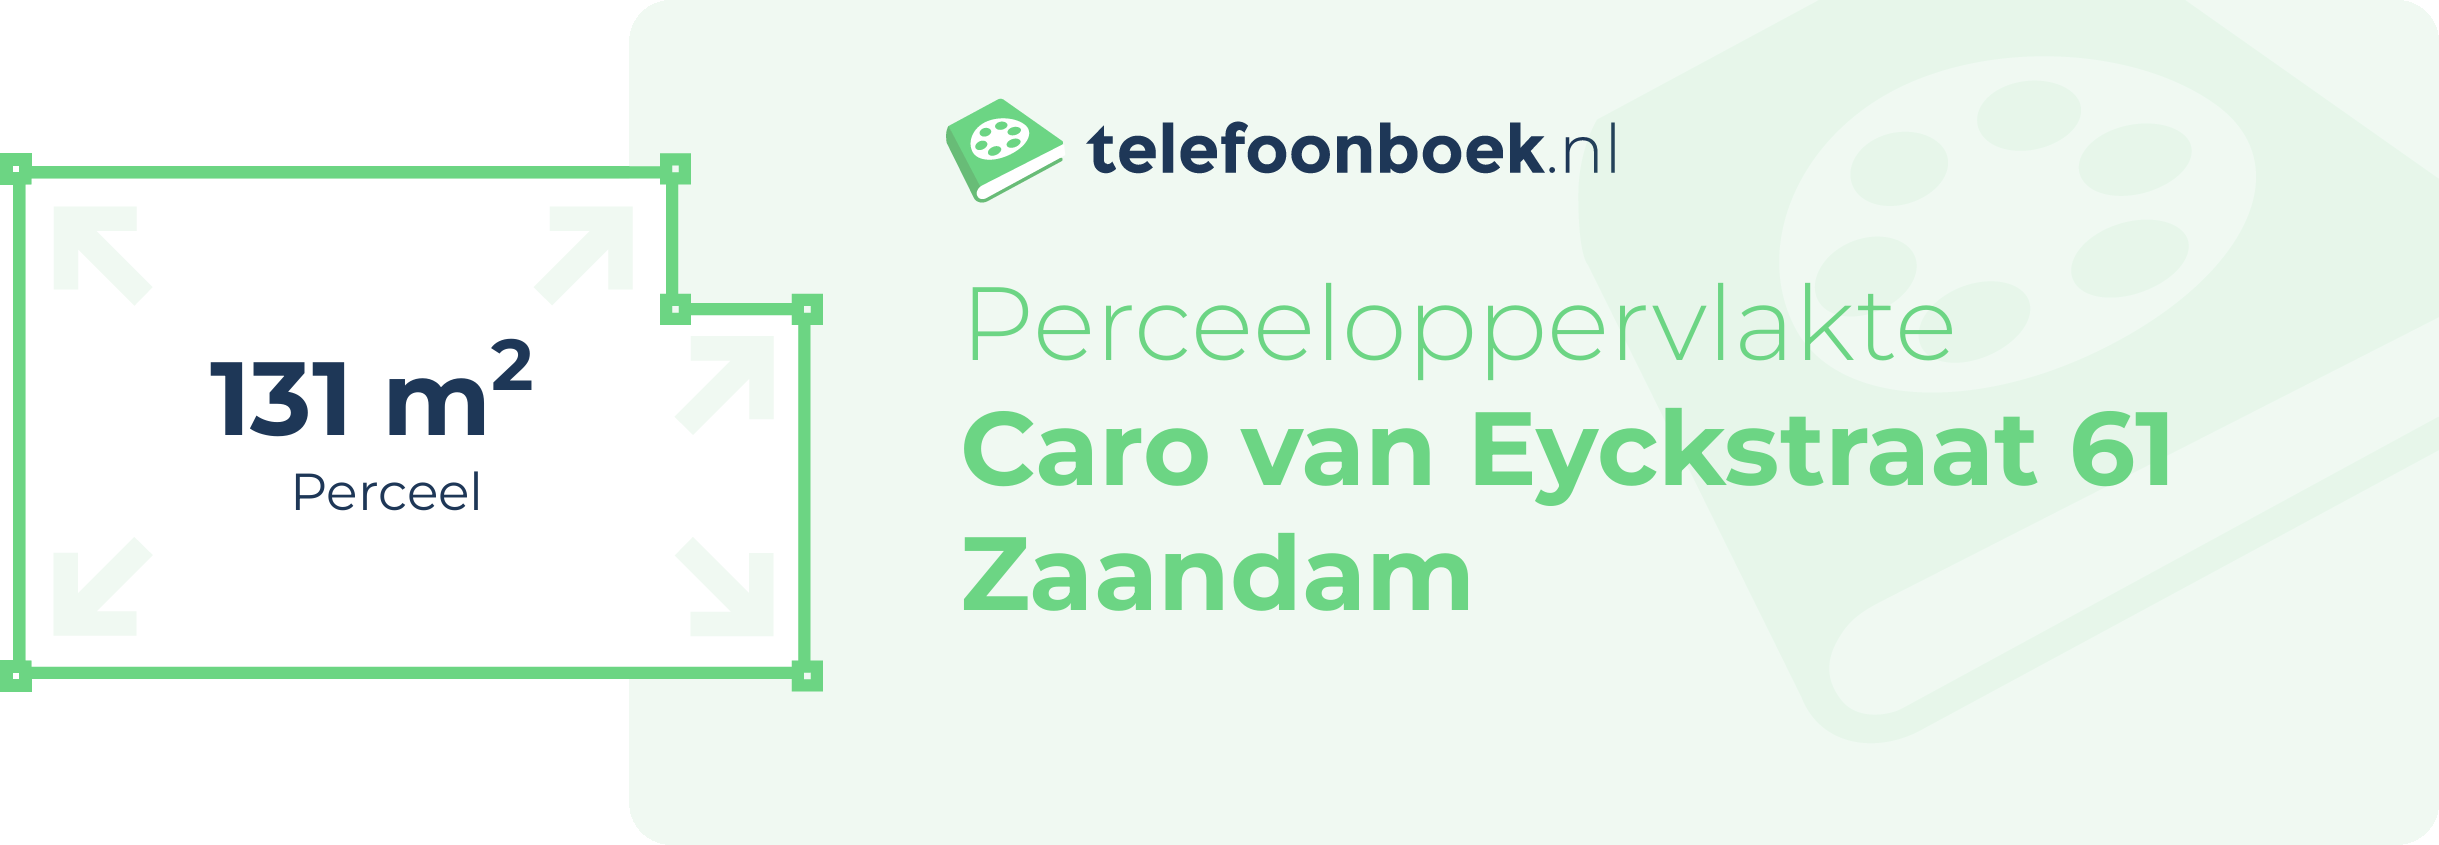 Perceeloppervlakte Caro Van Eyckstraat 61 Zaandam